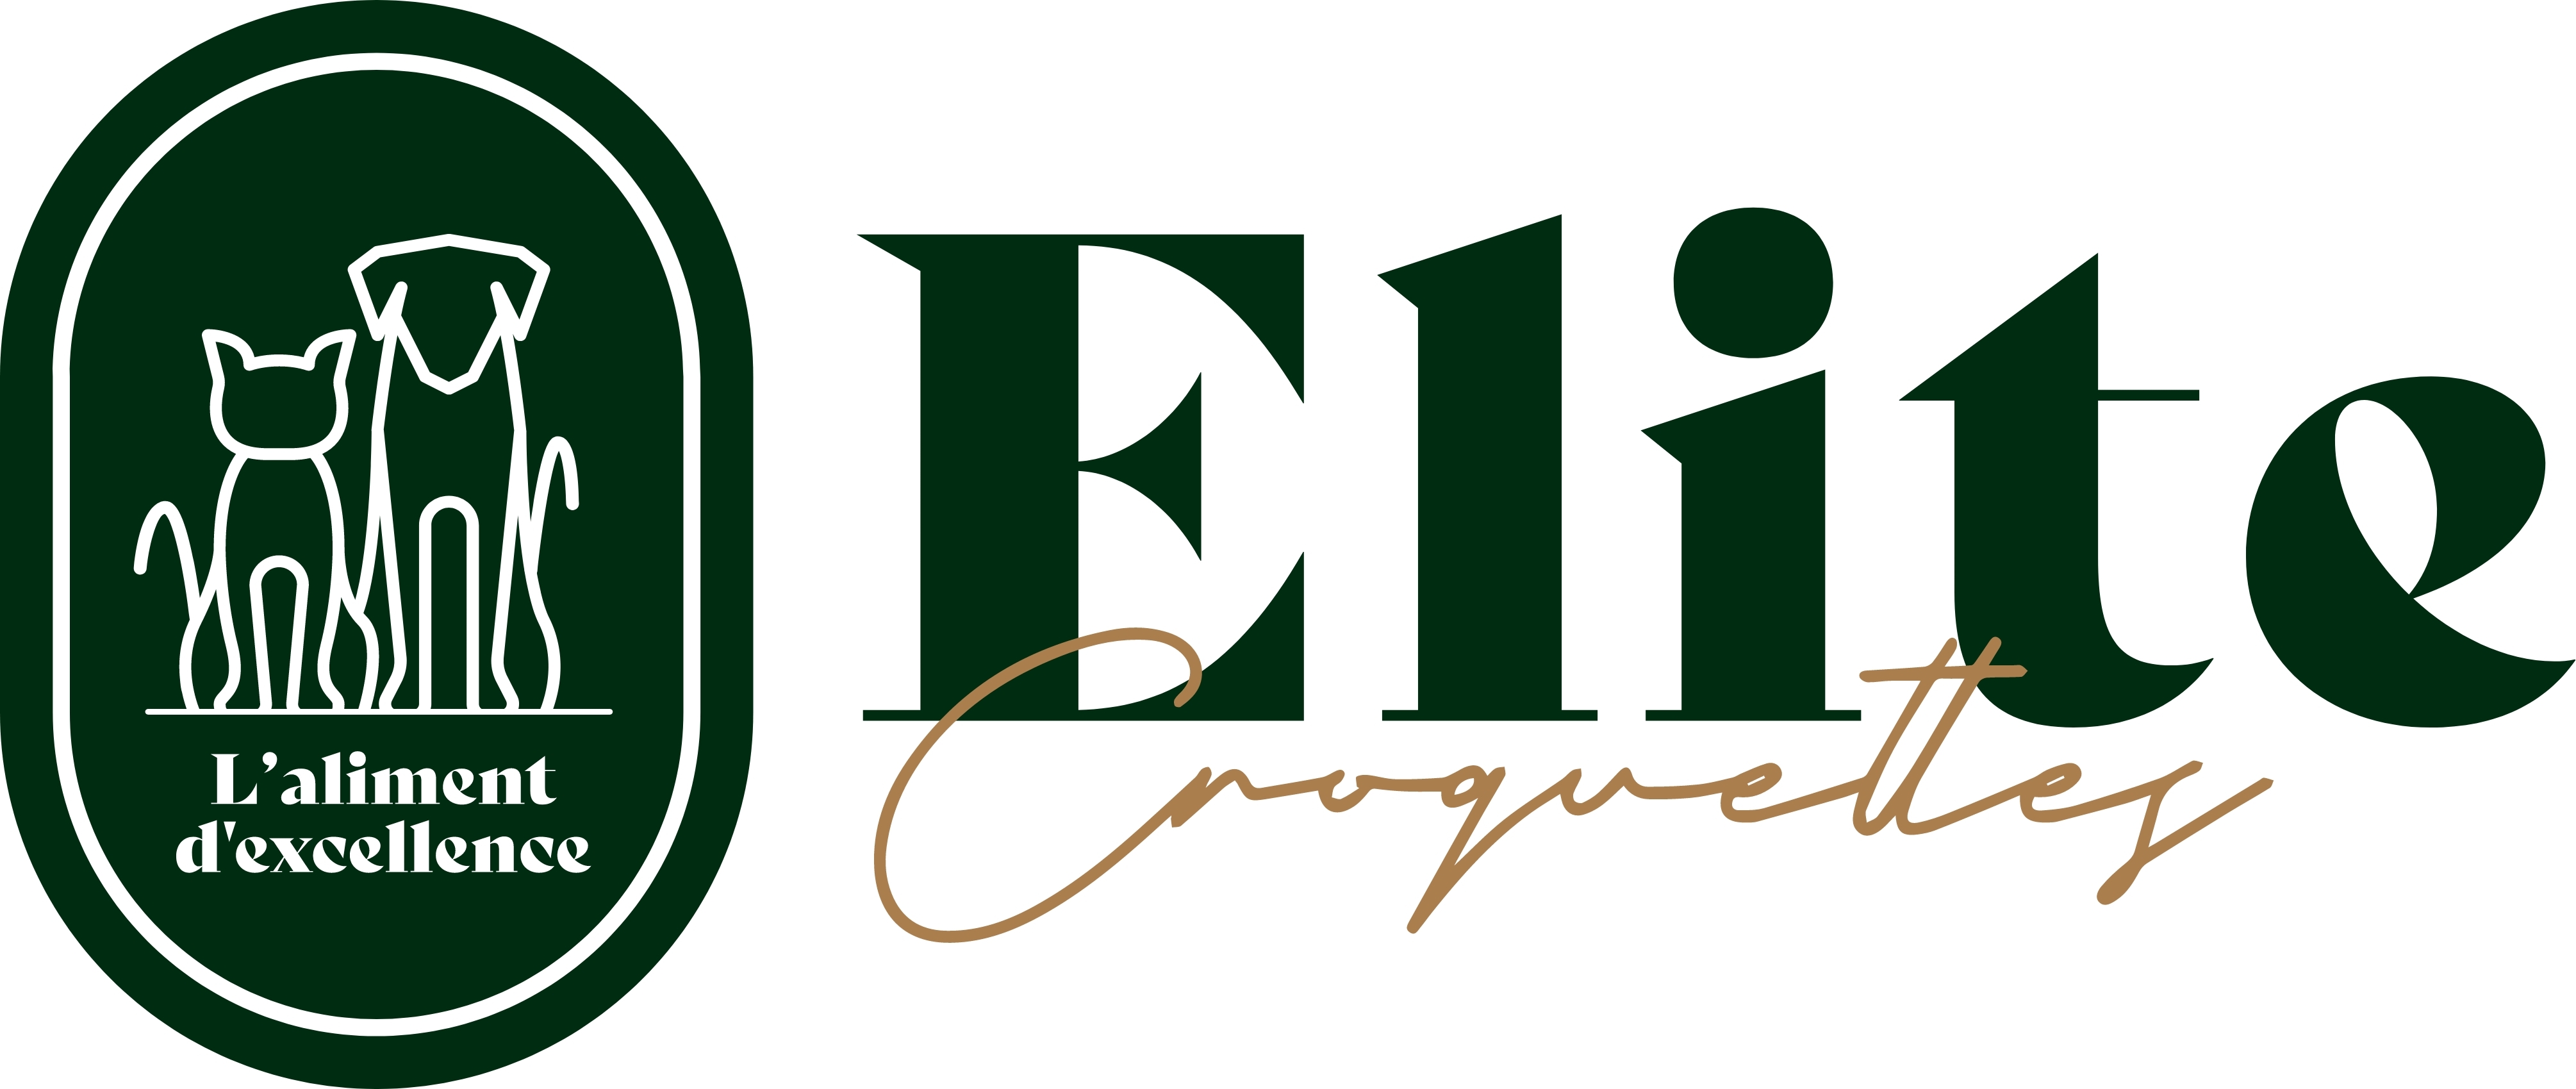 Logo_Elite_Croquettes-vert anglais.jpg